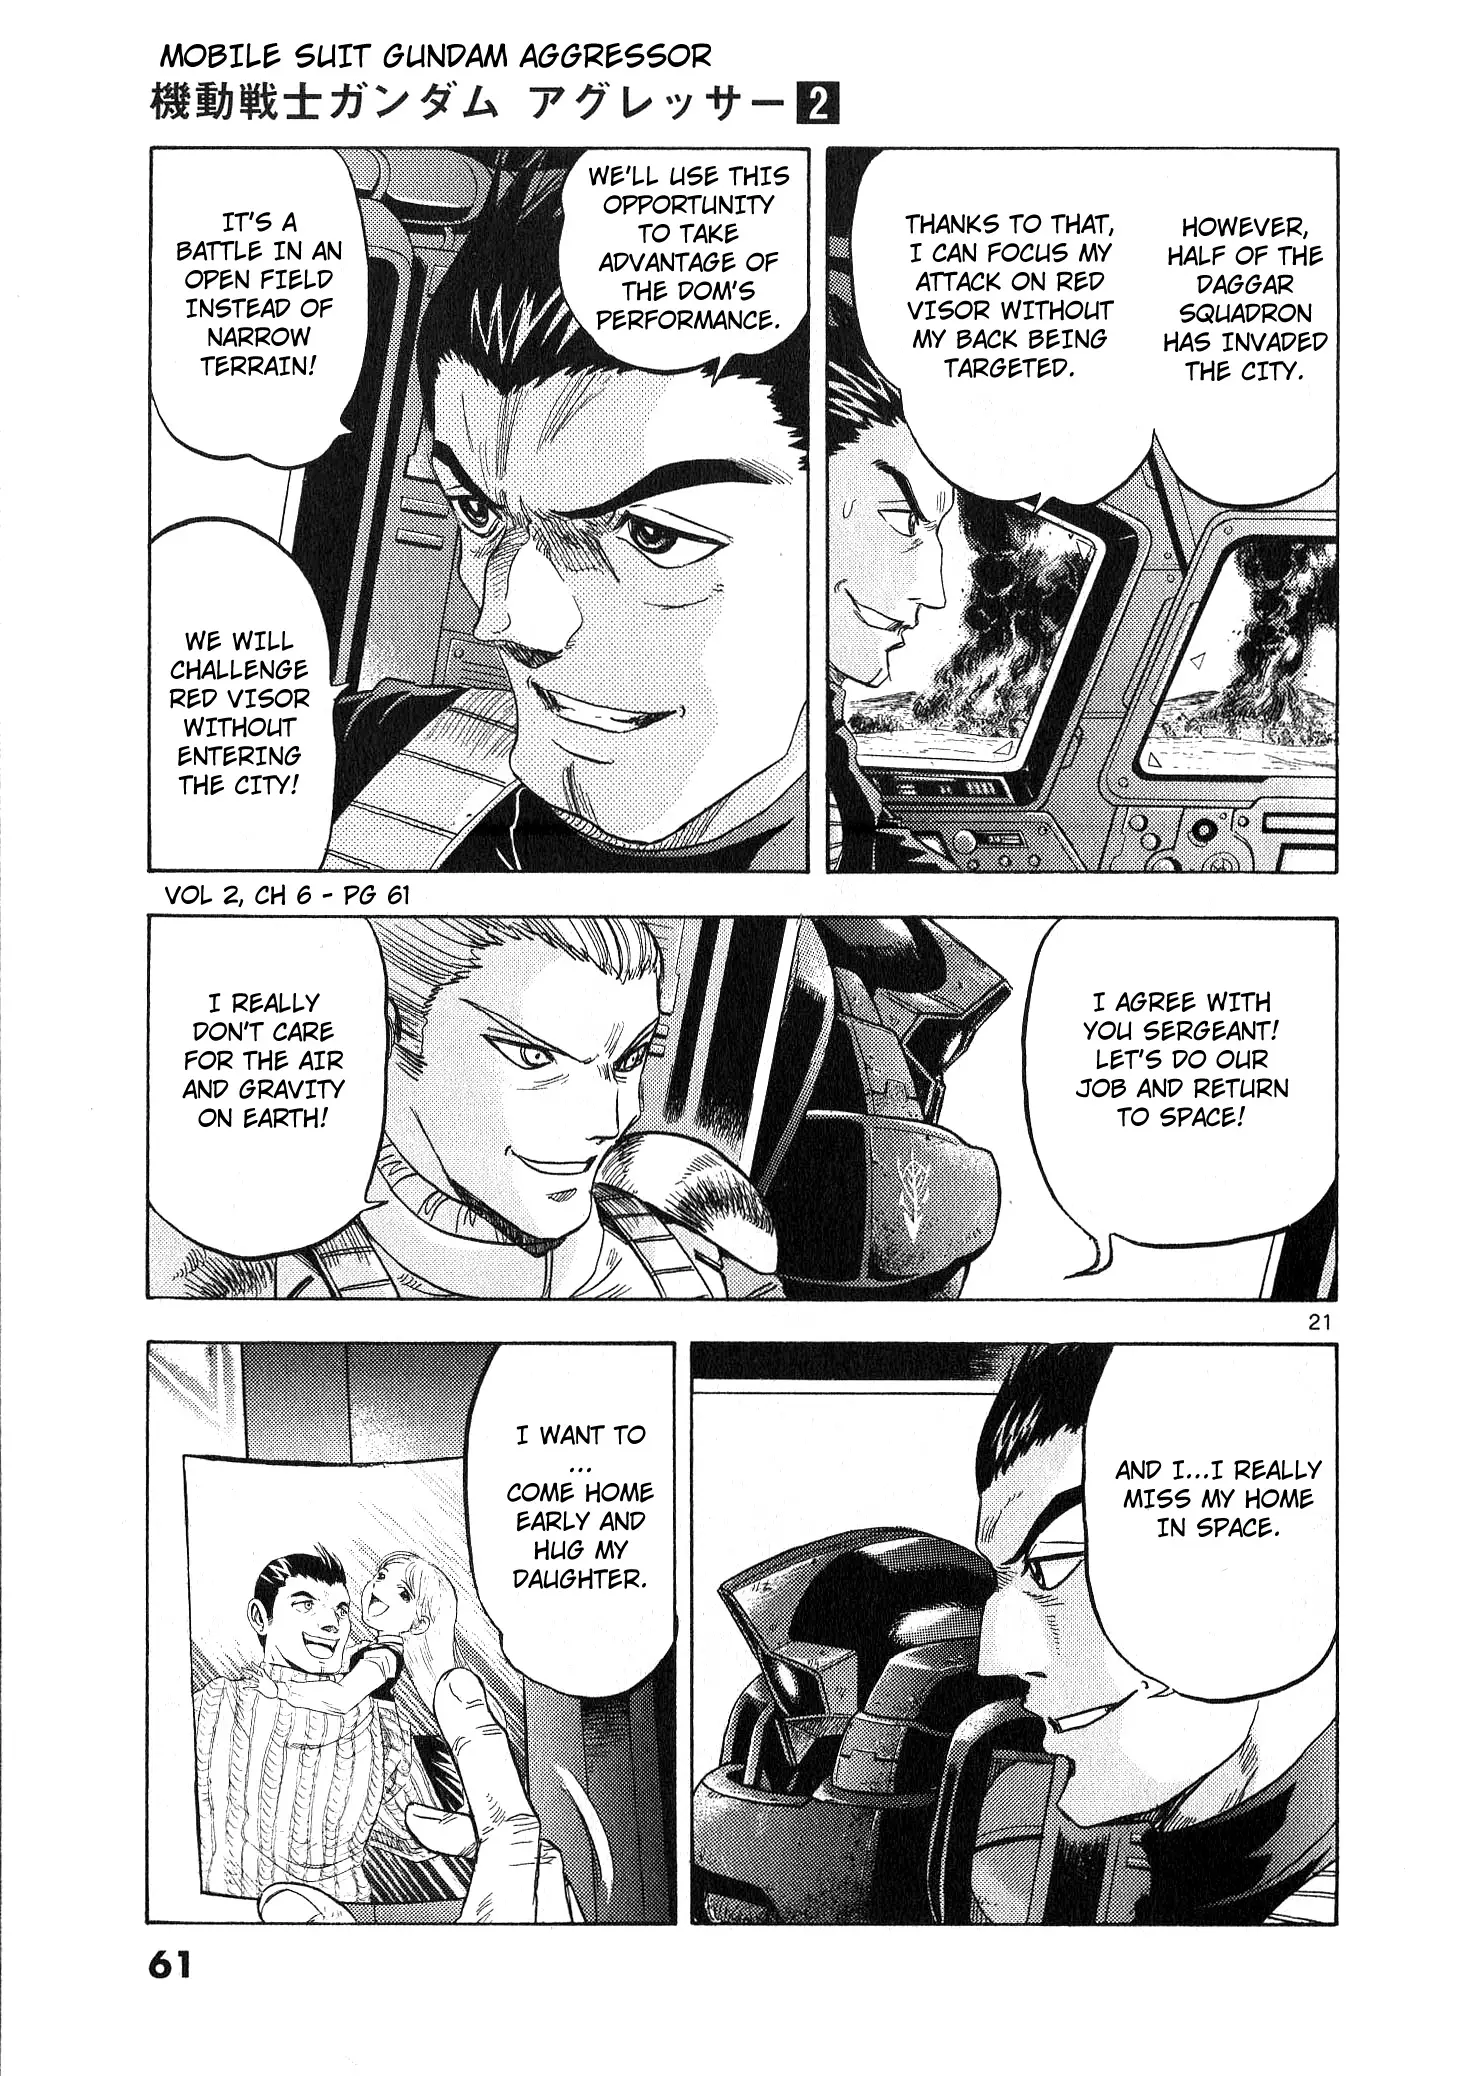 Mobile Suit Gundam Aggressor - 6 page 20-98cddb36